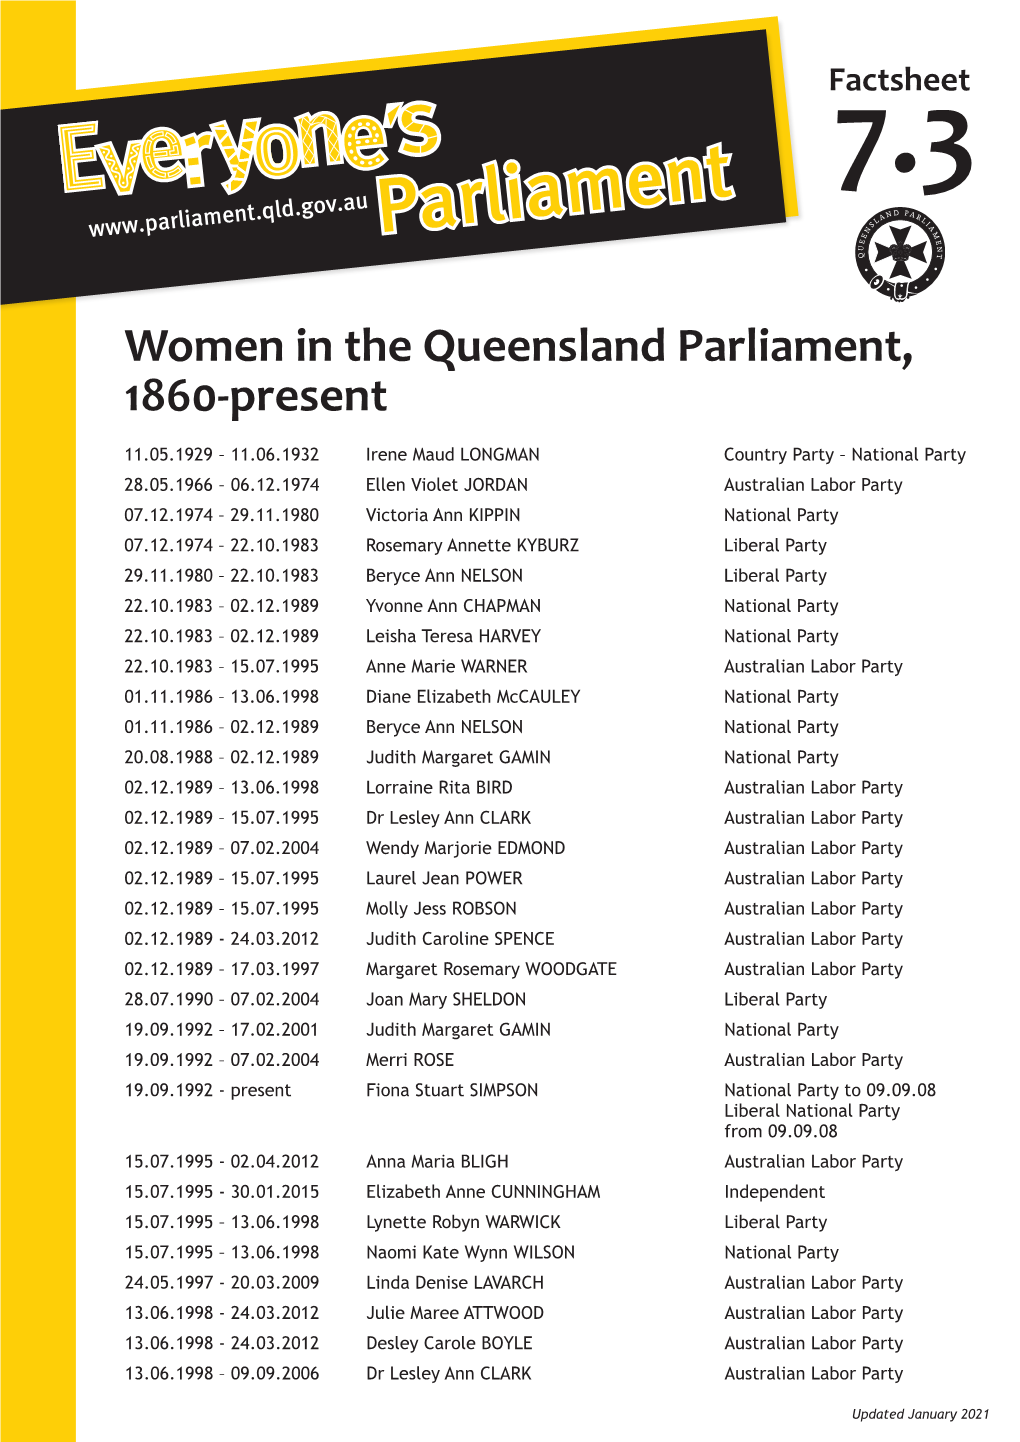 Women in the Queensland Parliament, 1860-Present